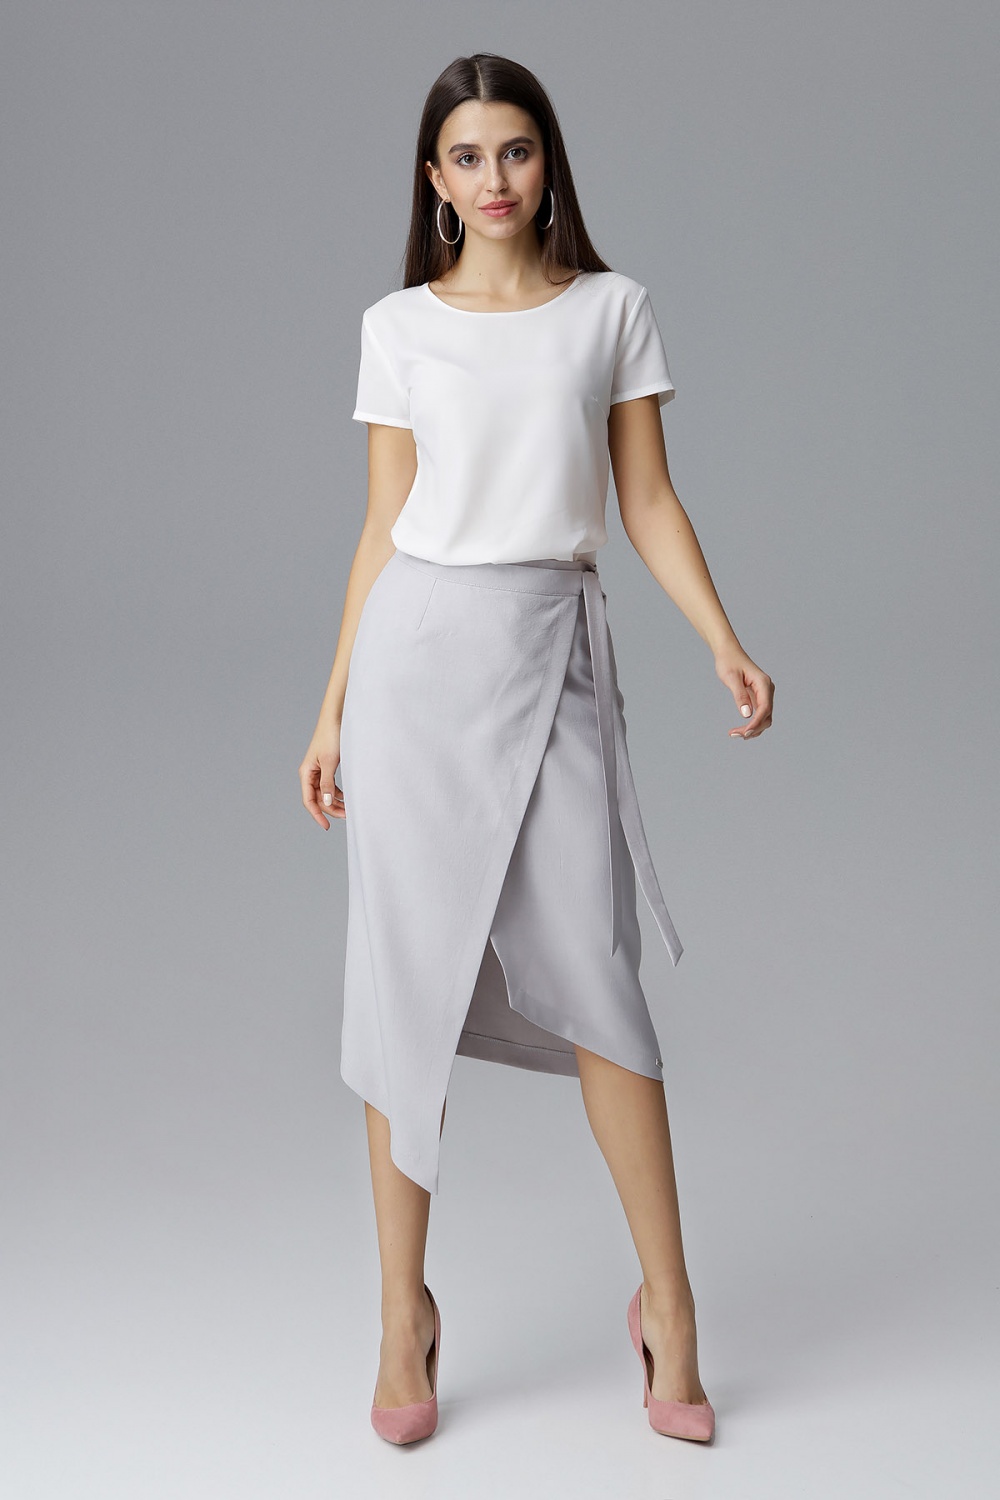  Skirt model 126031 Figl  grey